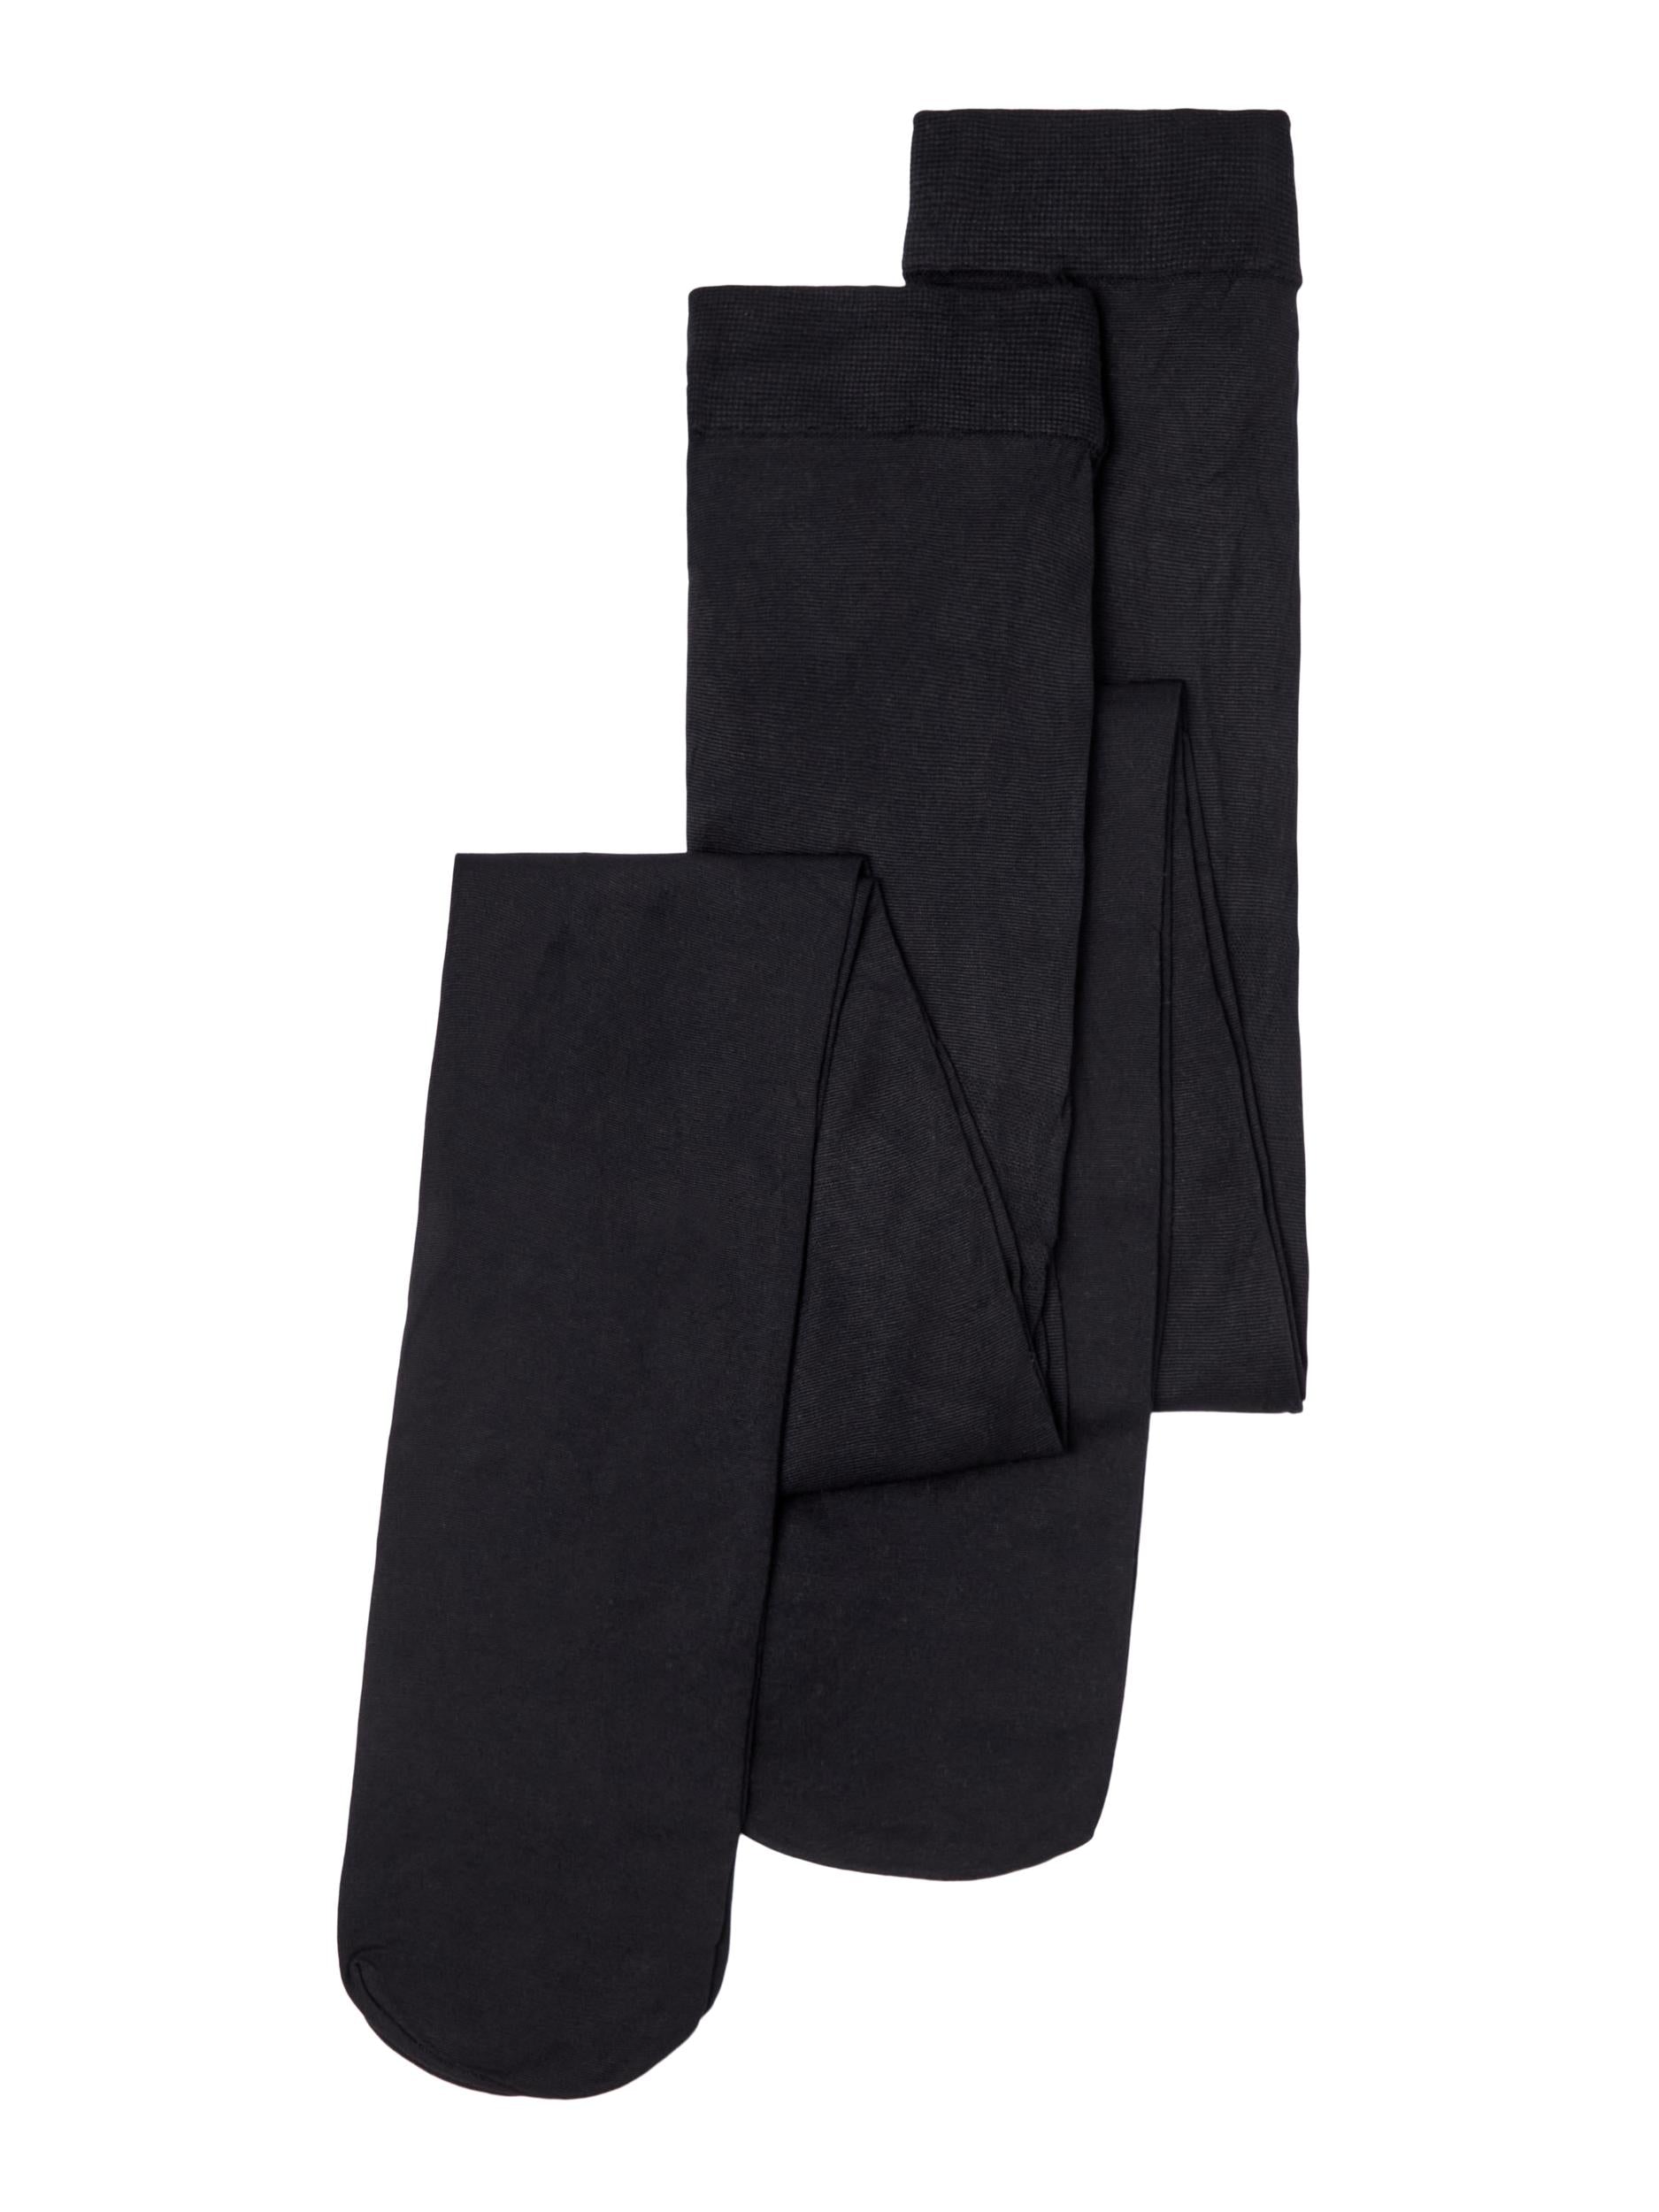 Girl's Pantyhose Nylon 2 Pack 60d-Black-Close Up View